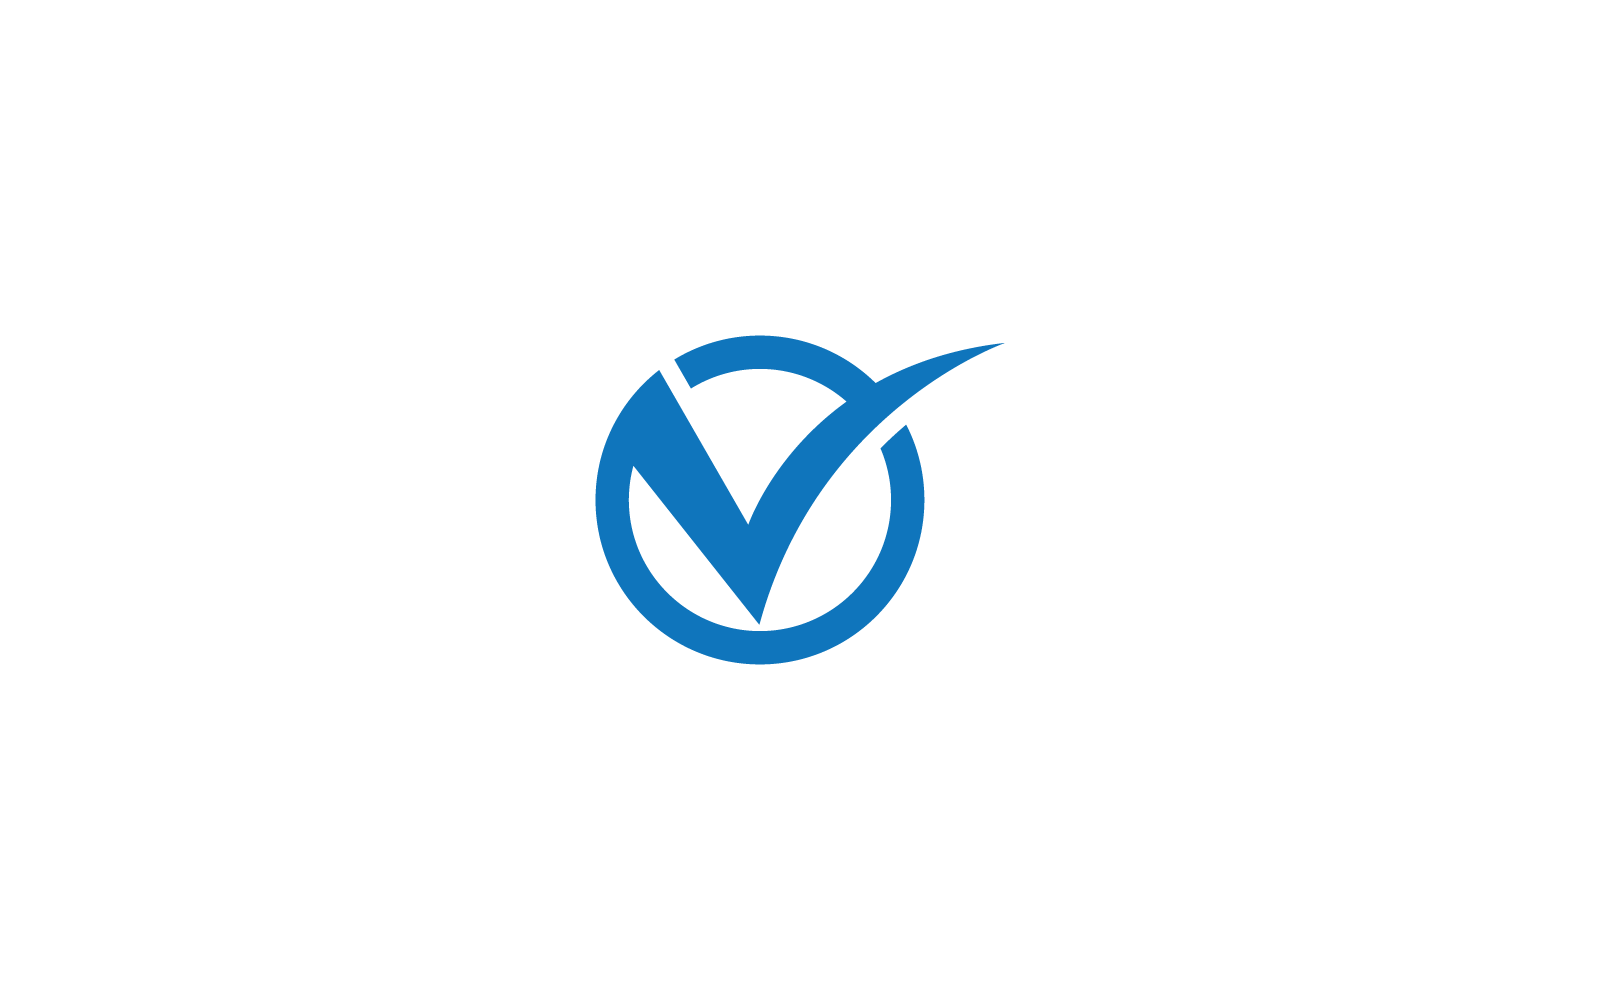 V Letter logo template vector illustration flat design